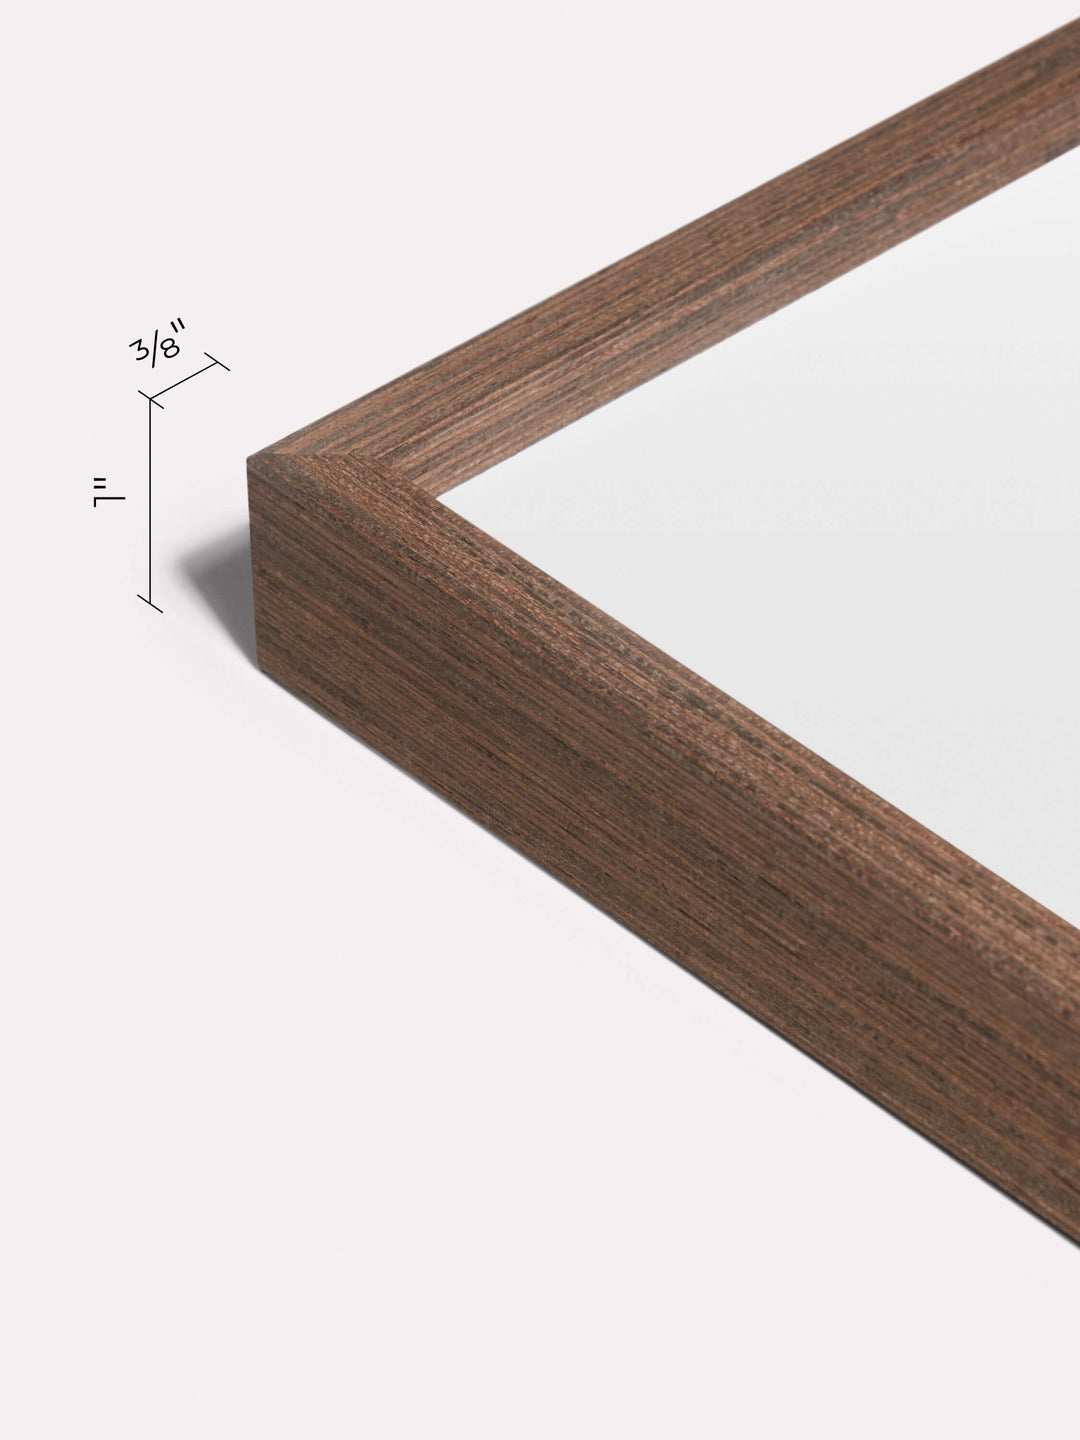 24x30-inch Thin Frame, Walnut - Close-up view